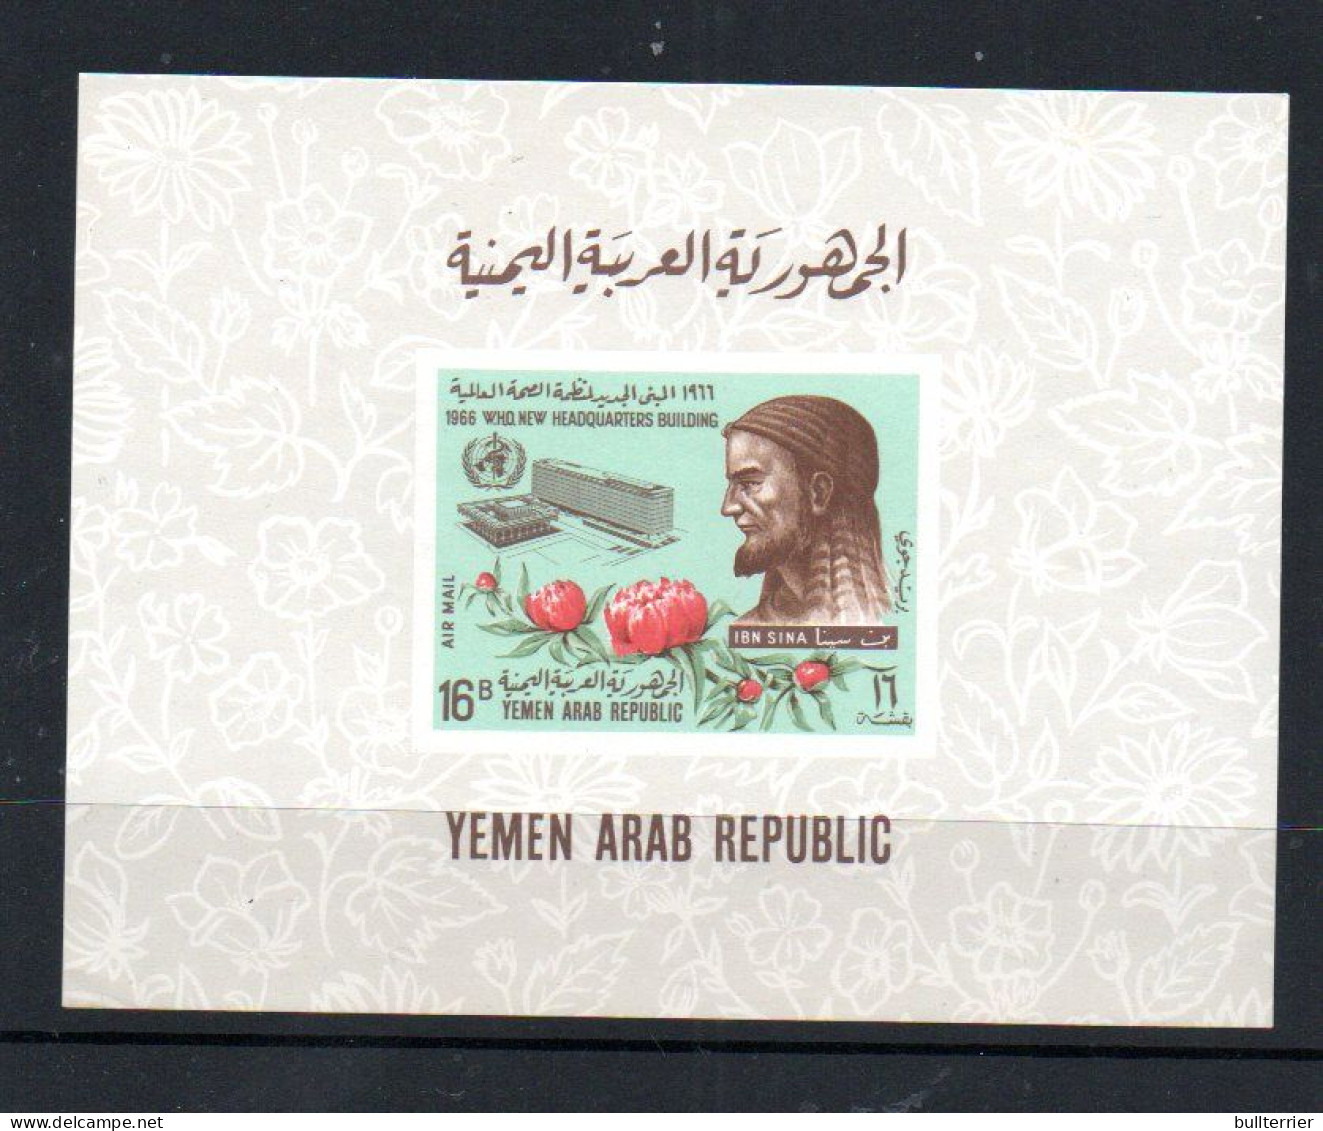 MEDICINE - YEMEN ARAB REPUBLIC - 1966 - WHO / IBN  SINA SOUVENIR SHEET  MINT NEVER HINGED SG £17 - Médecine